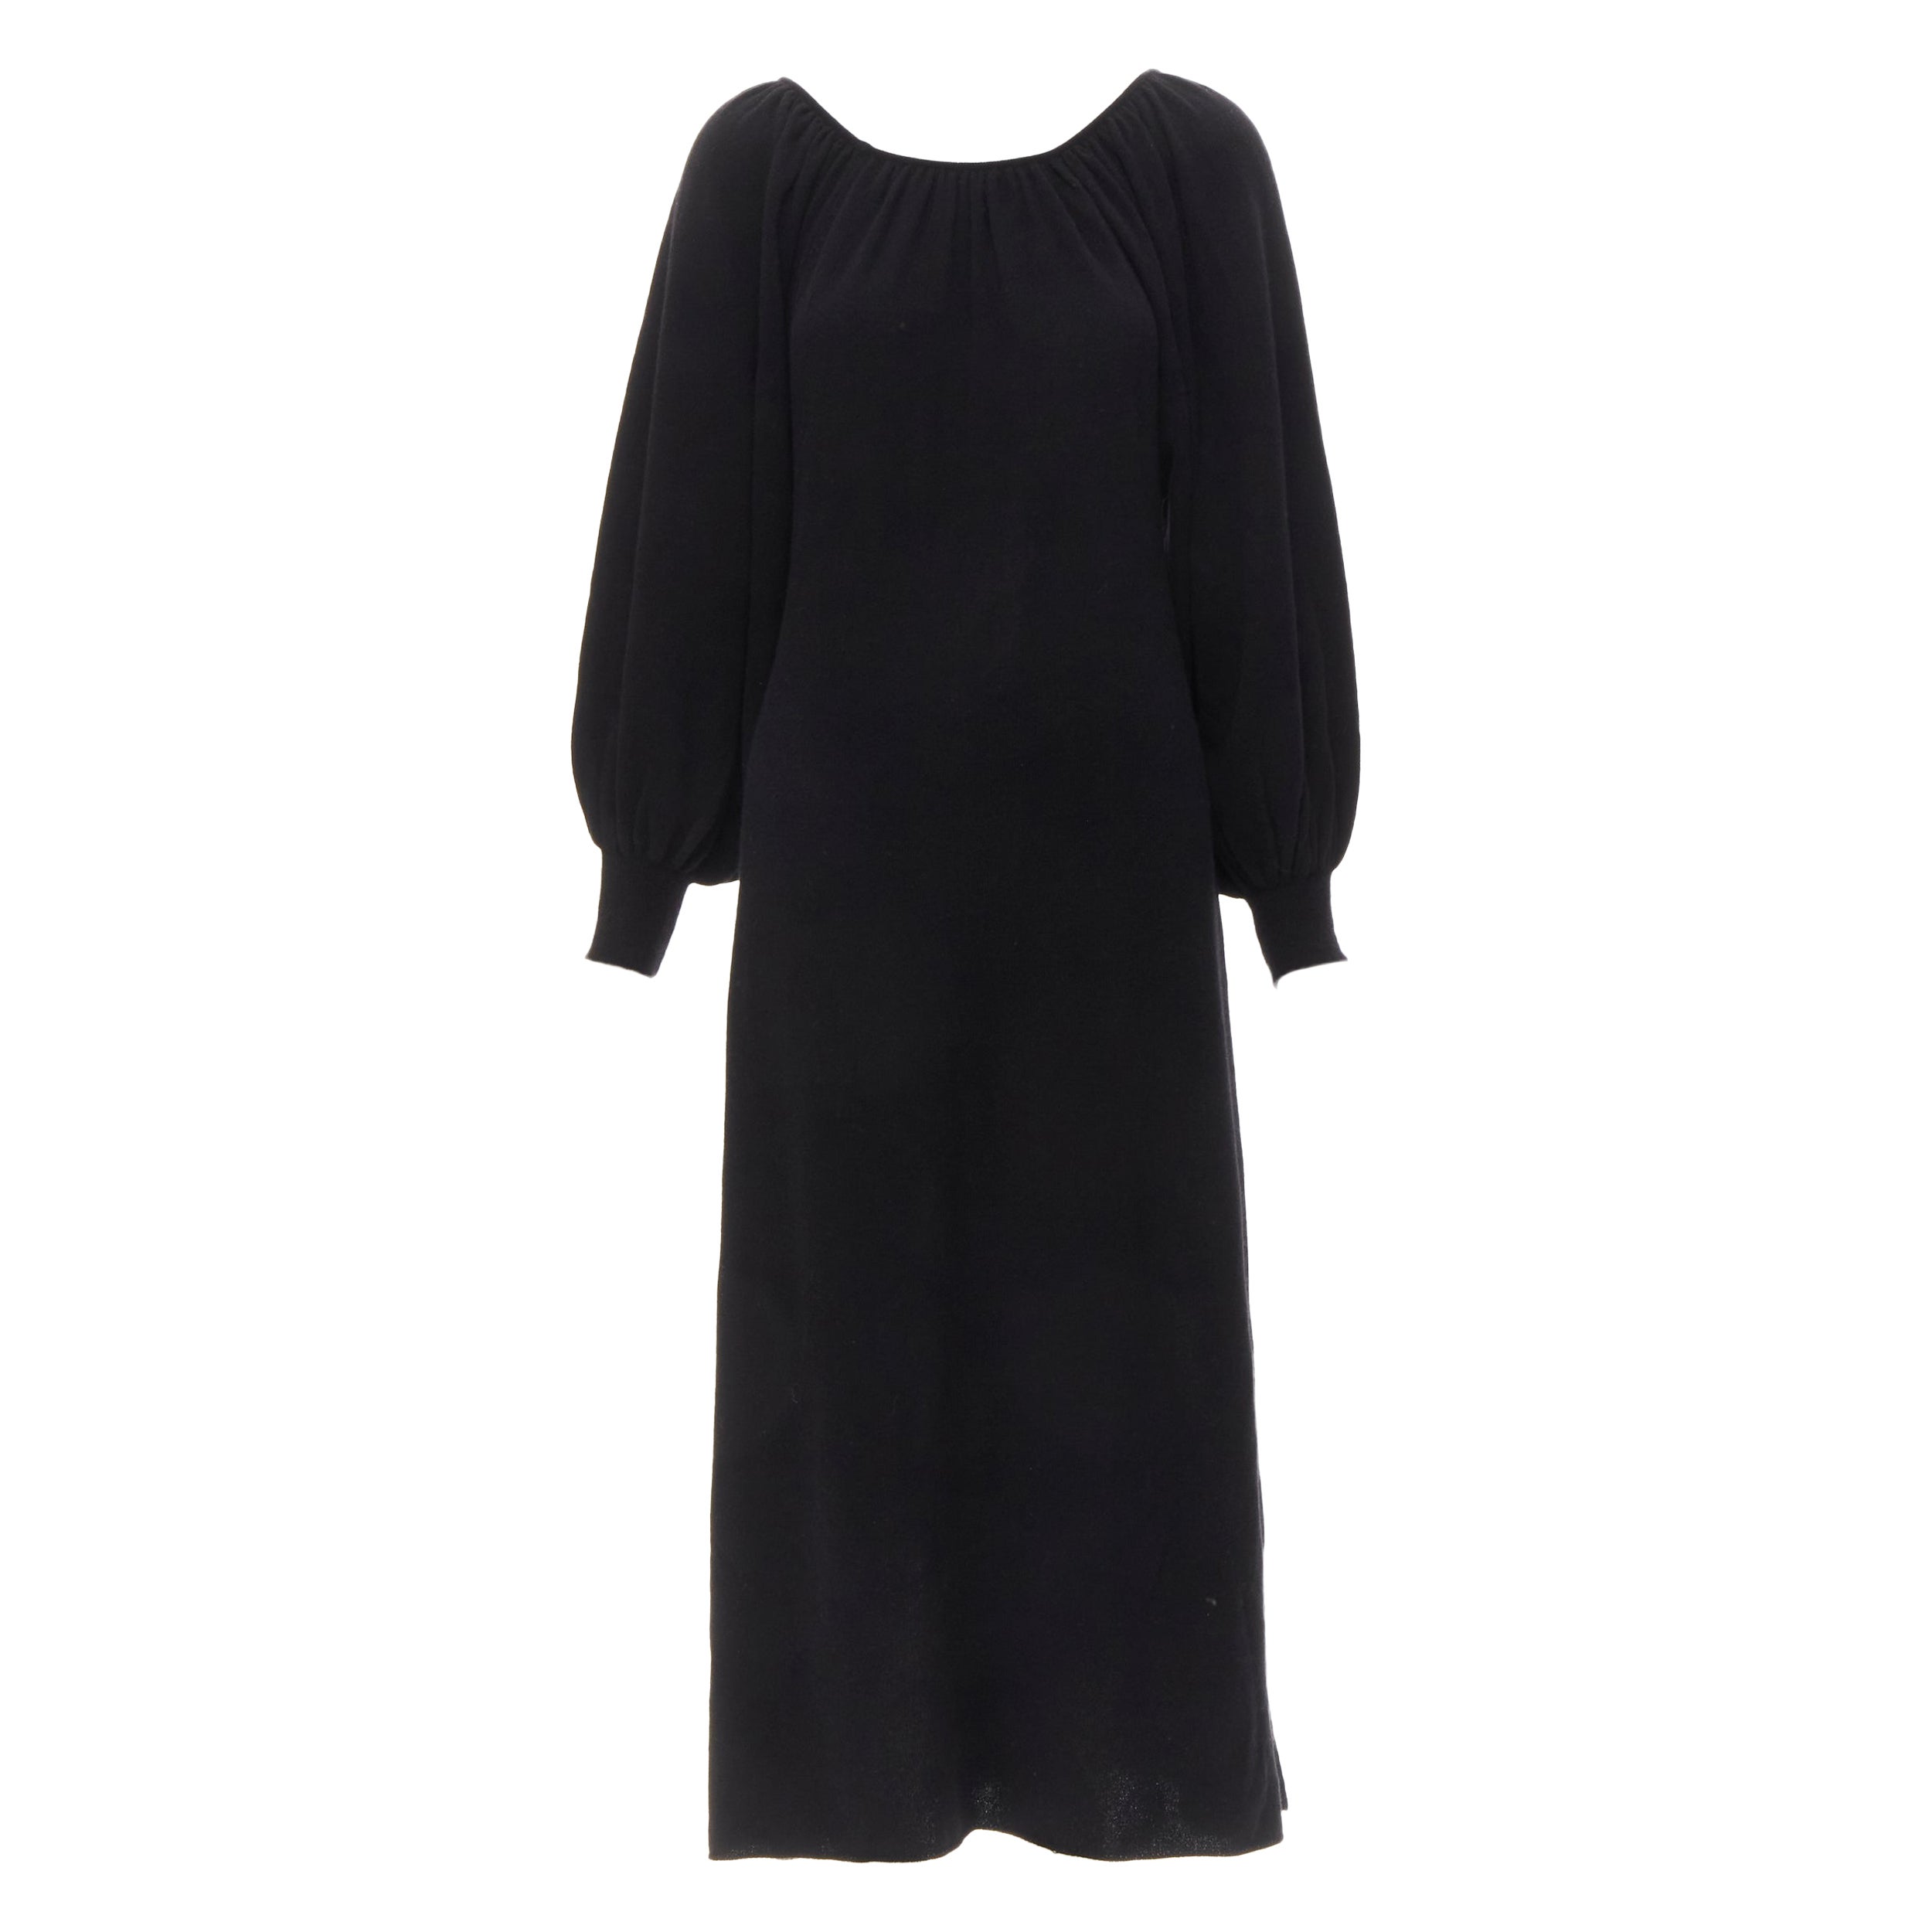 RYAN ROCHE 100% cashmere black pleated collar bubble sleeve midi dress S For Sale